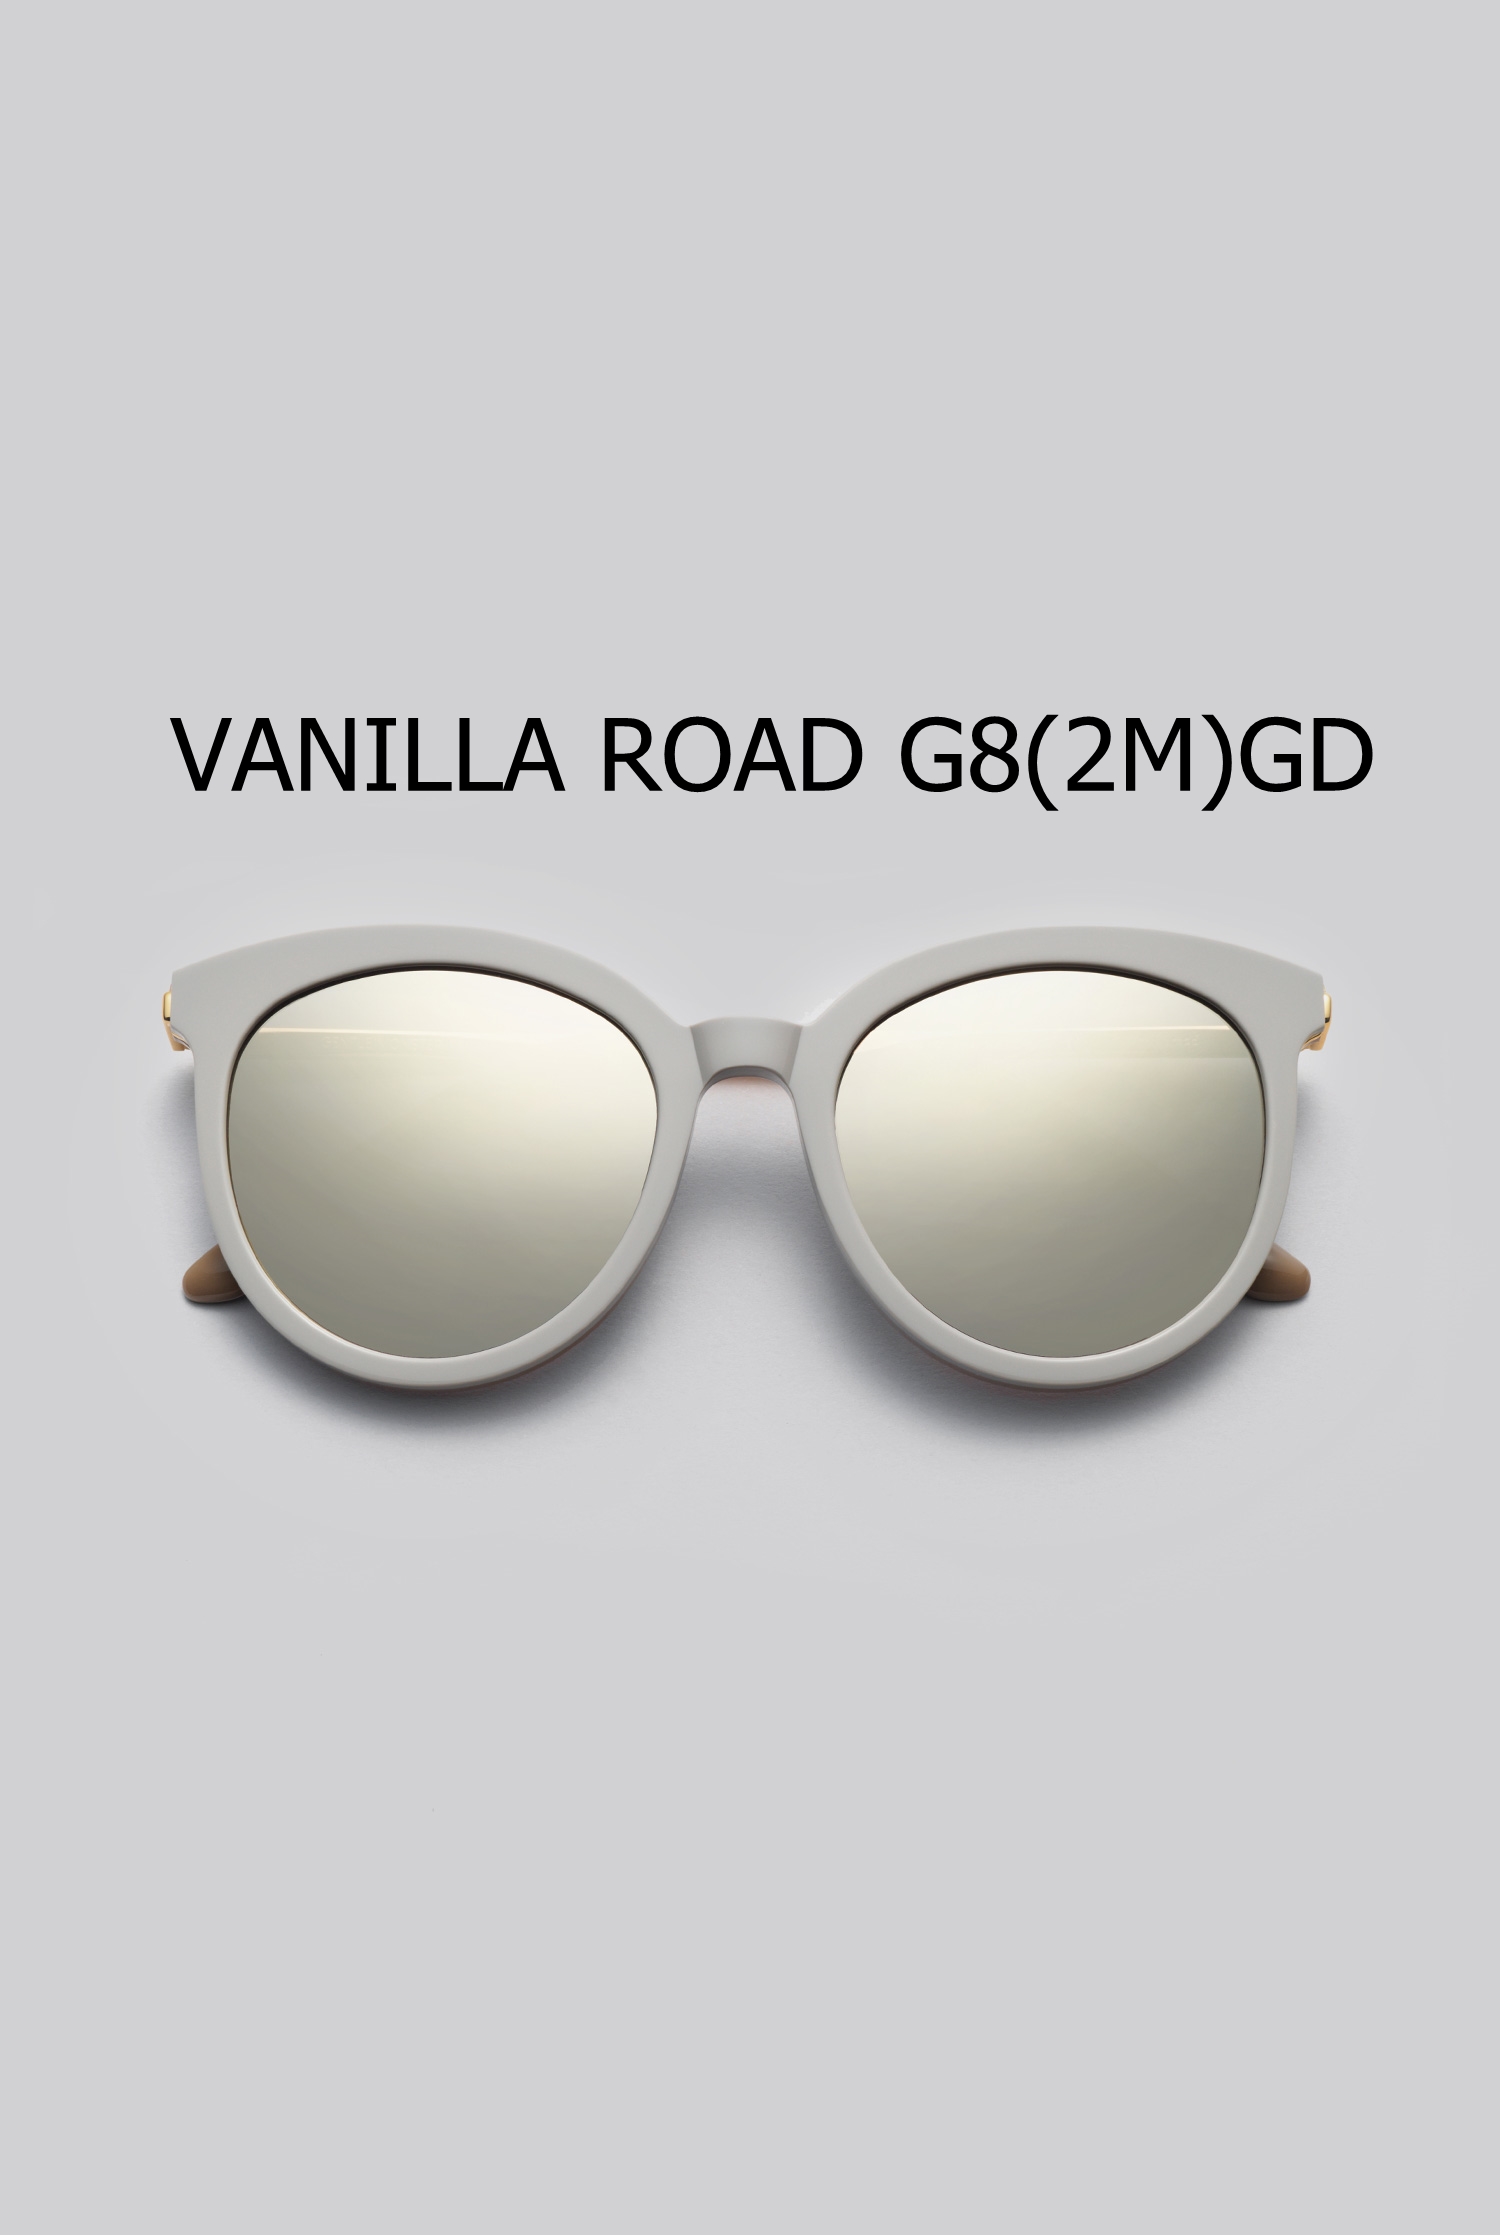 VANILLA ROAD G8(2M)GD